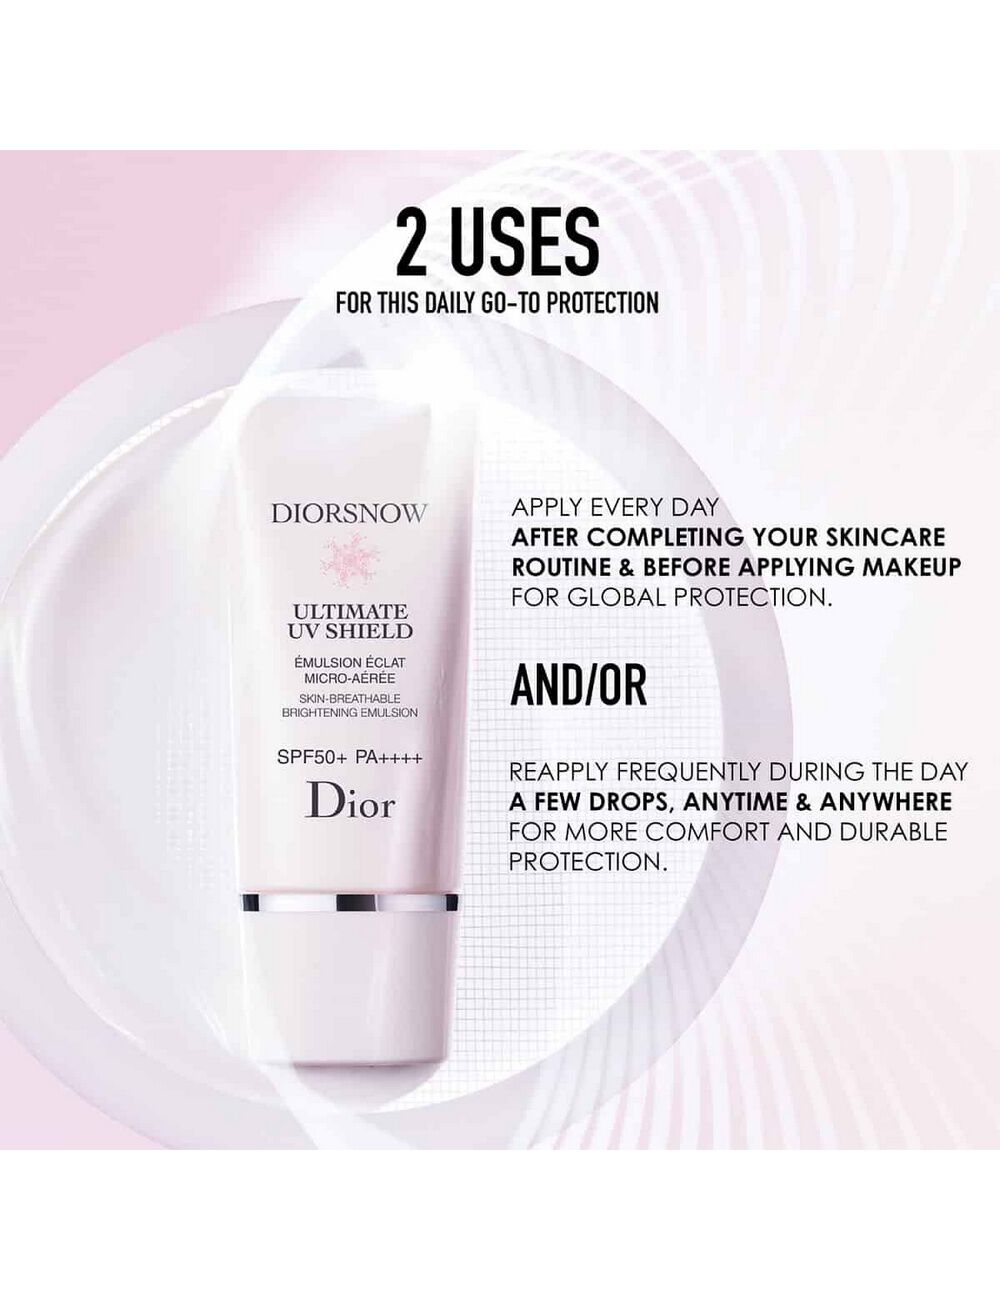 DIOR Diorsnow Ultimate UV Shield Tone Up tinted skincare spf 50 pa 30mL   eBay